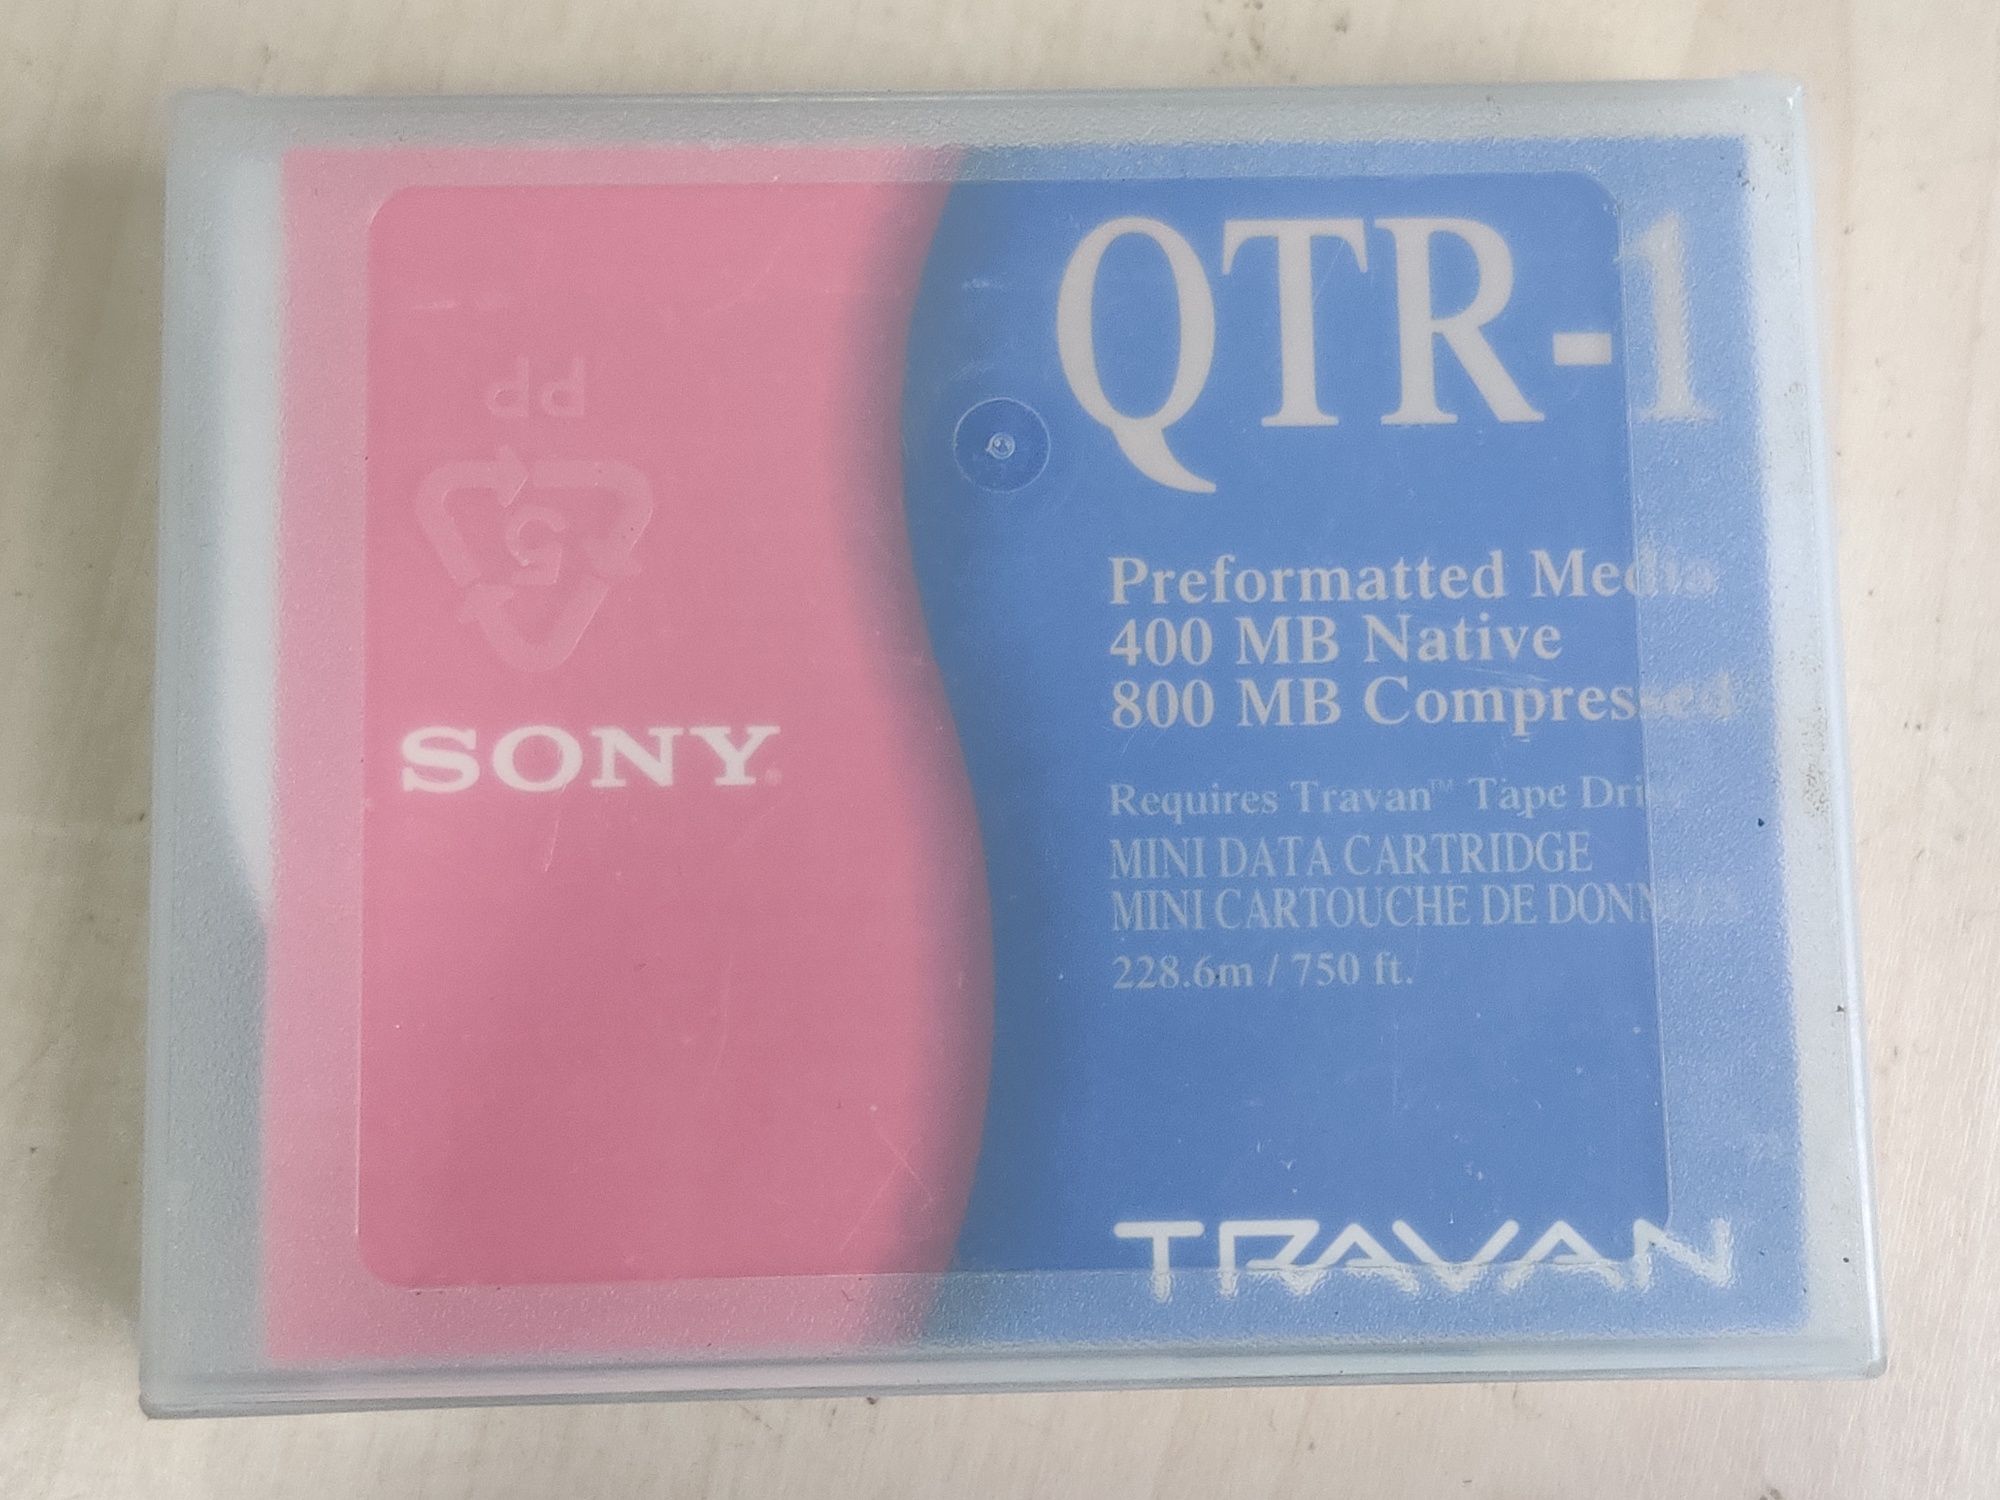 De colecție ! Memorie Sony QTR-1 , 800 MB , pe banda magnetica